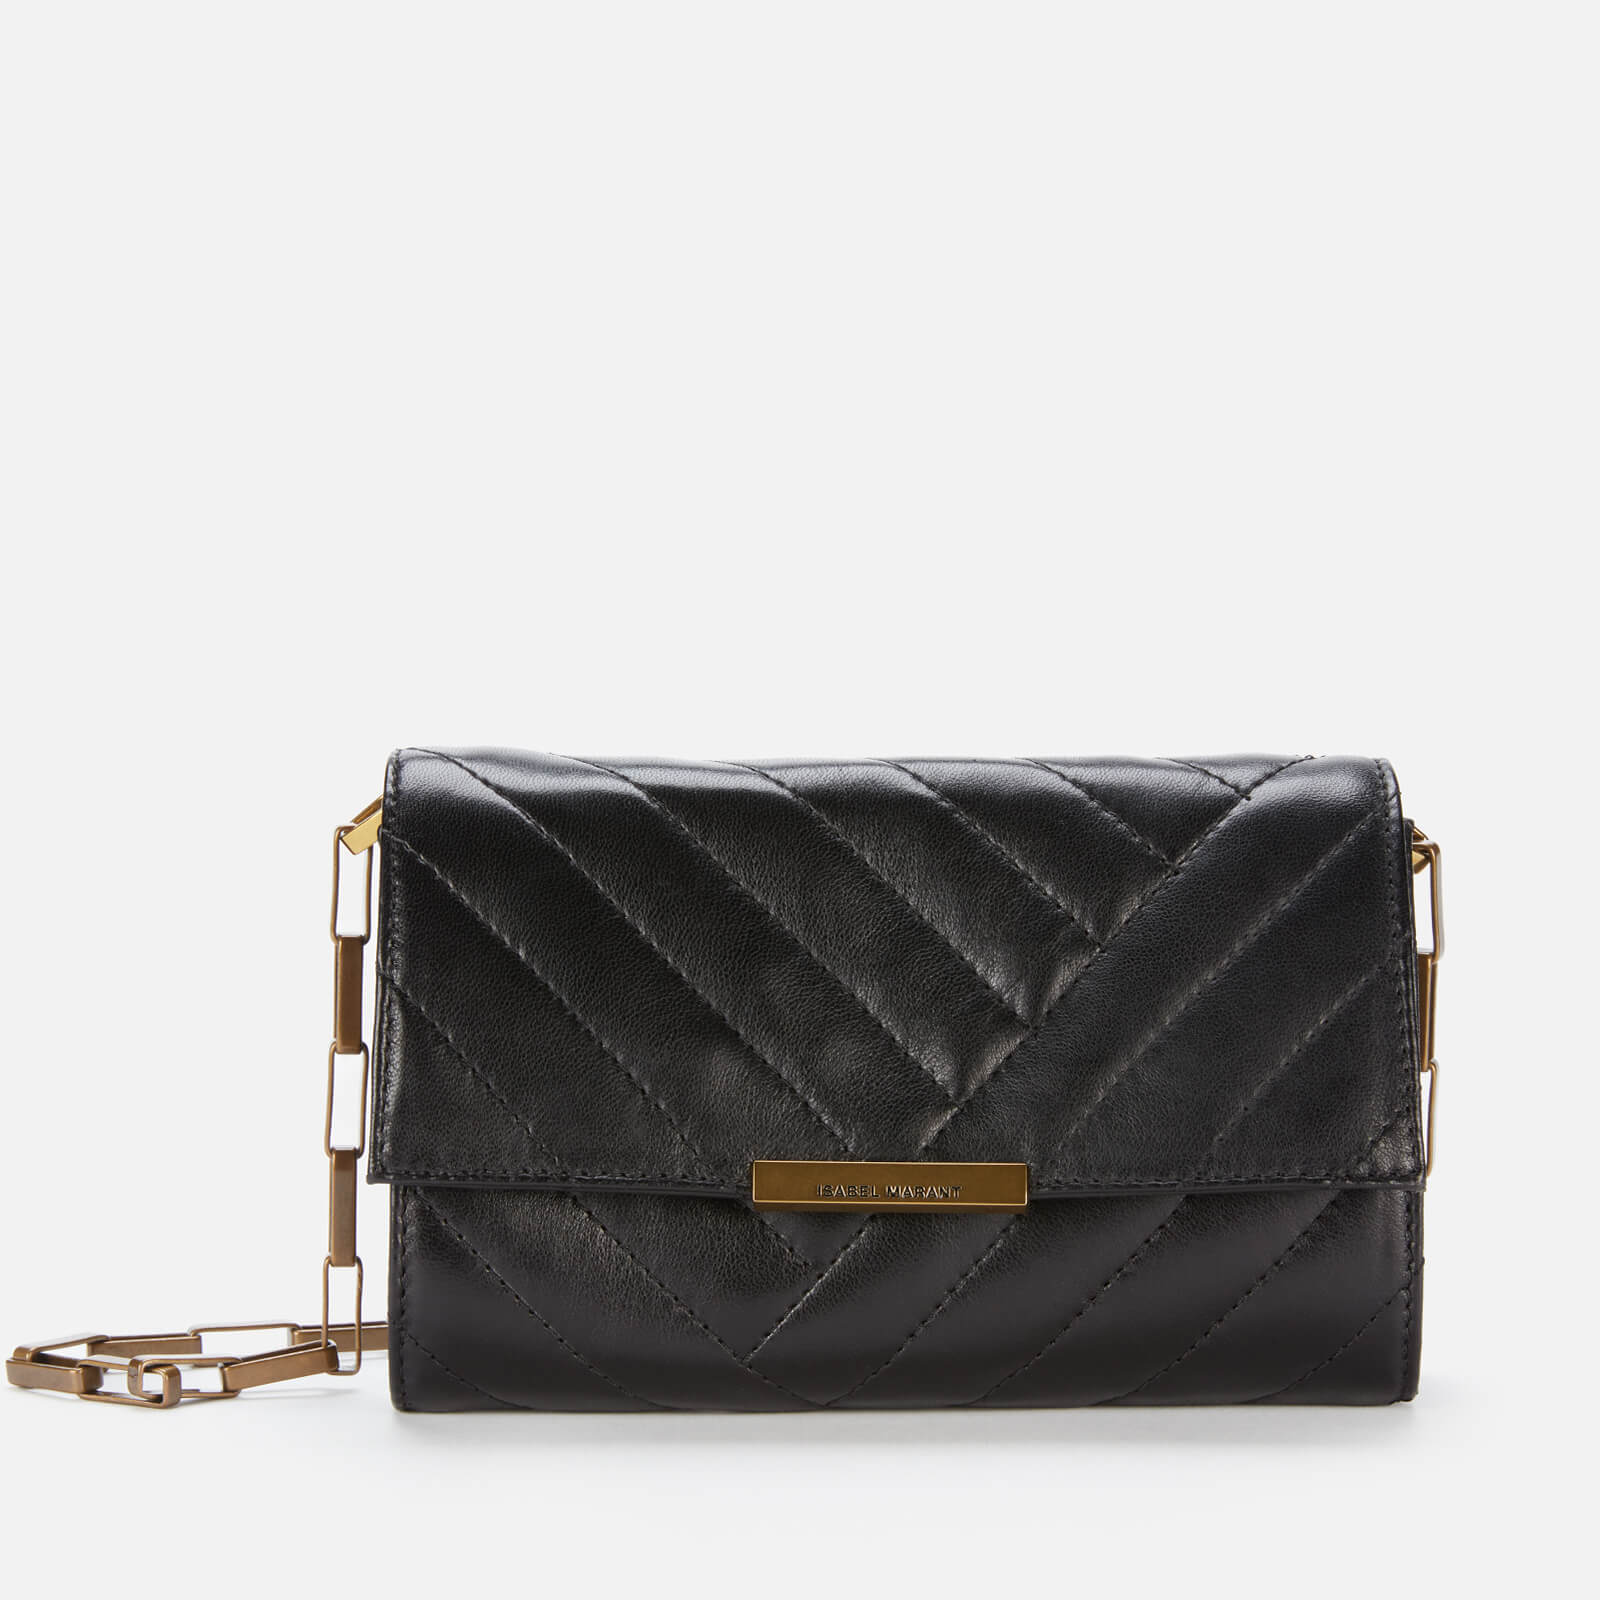 Isabel Marant Women's Devony Small Chain Bag - Black